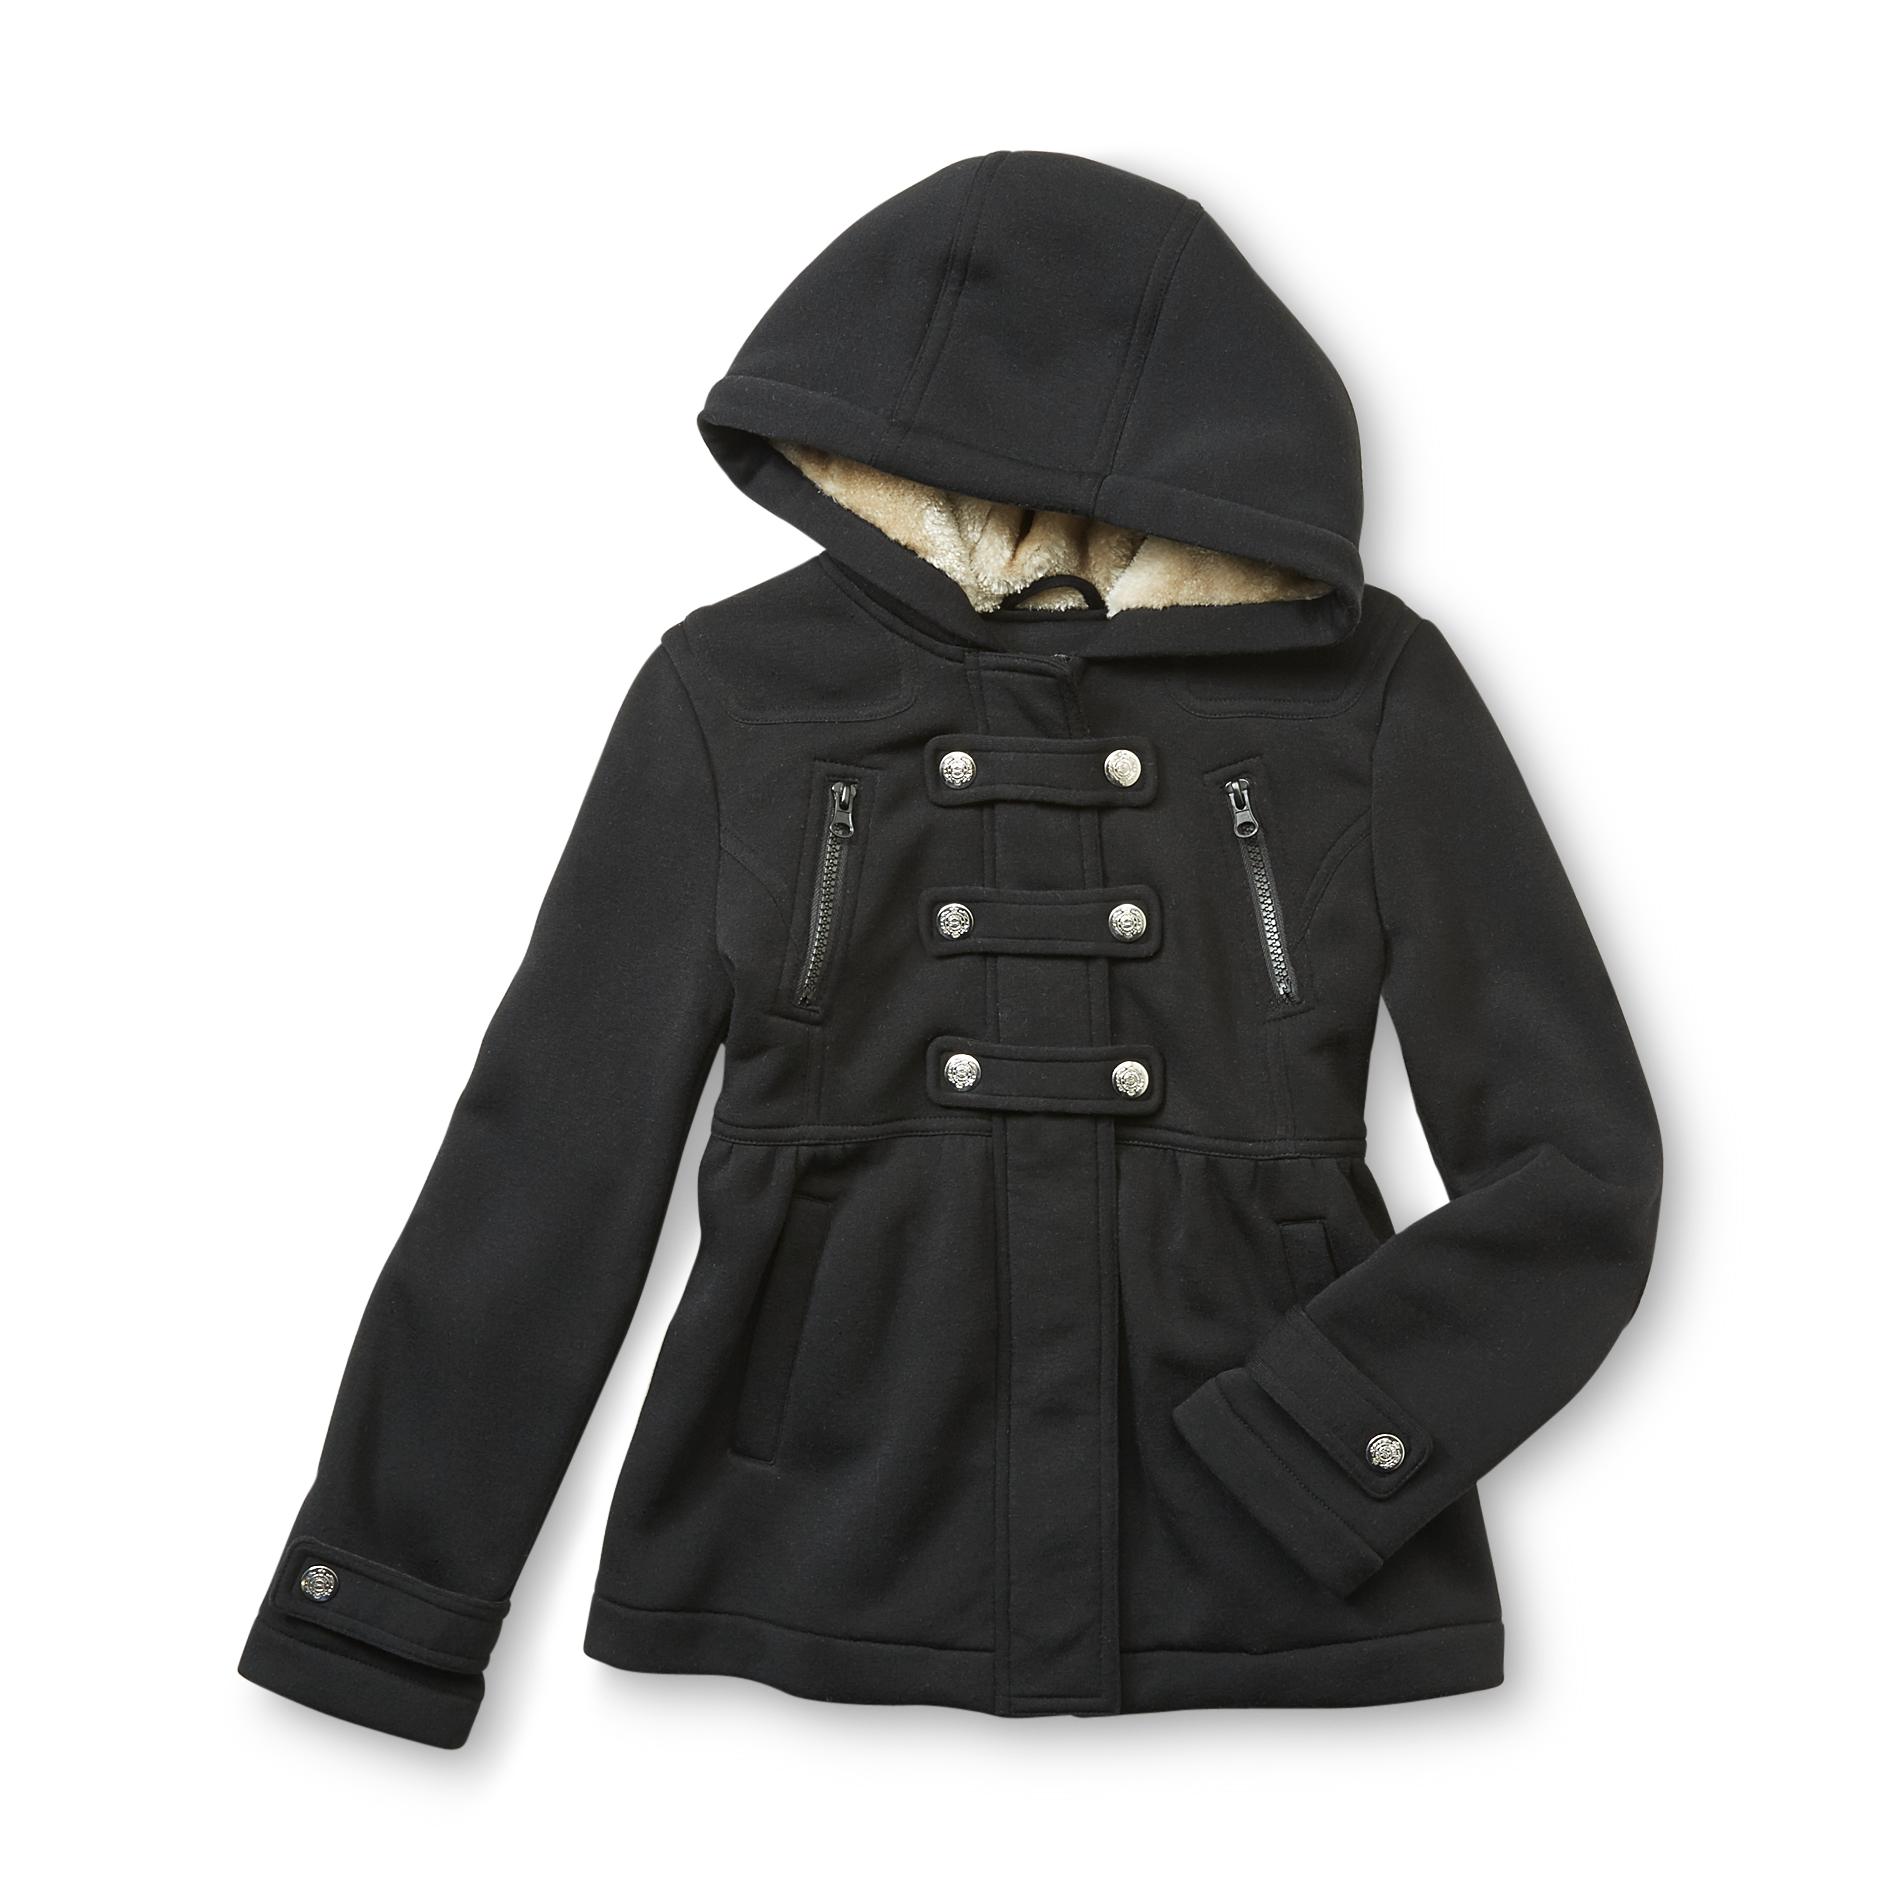 Route 66 Girl's Hooded Fleece Jacket - Military Detail